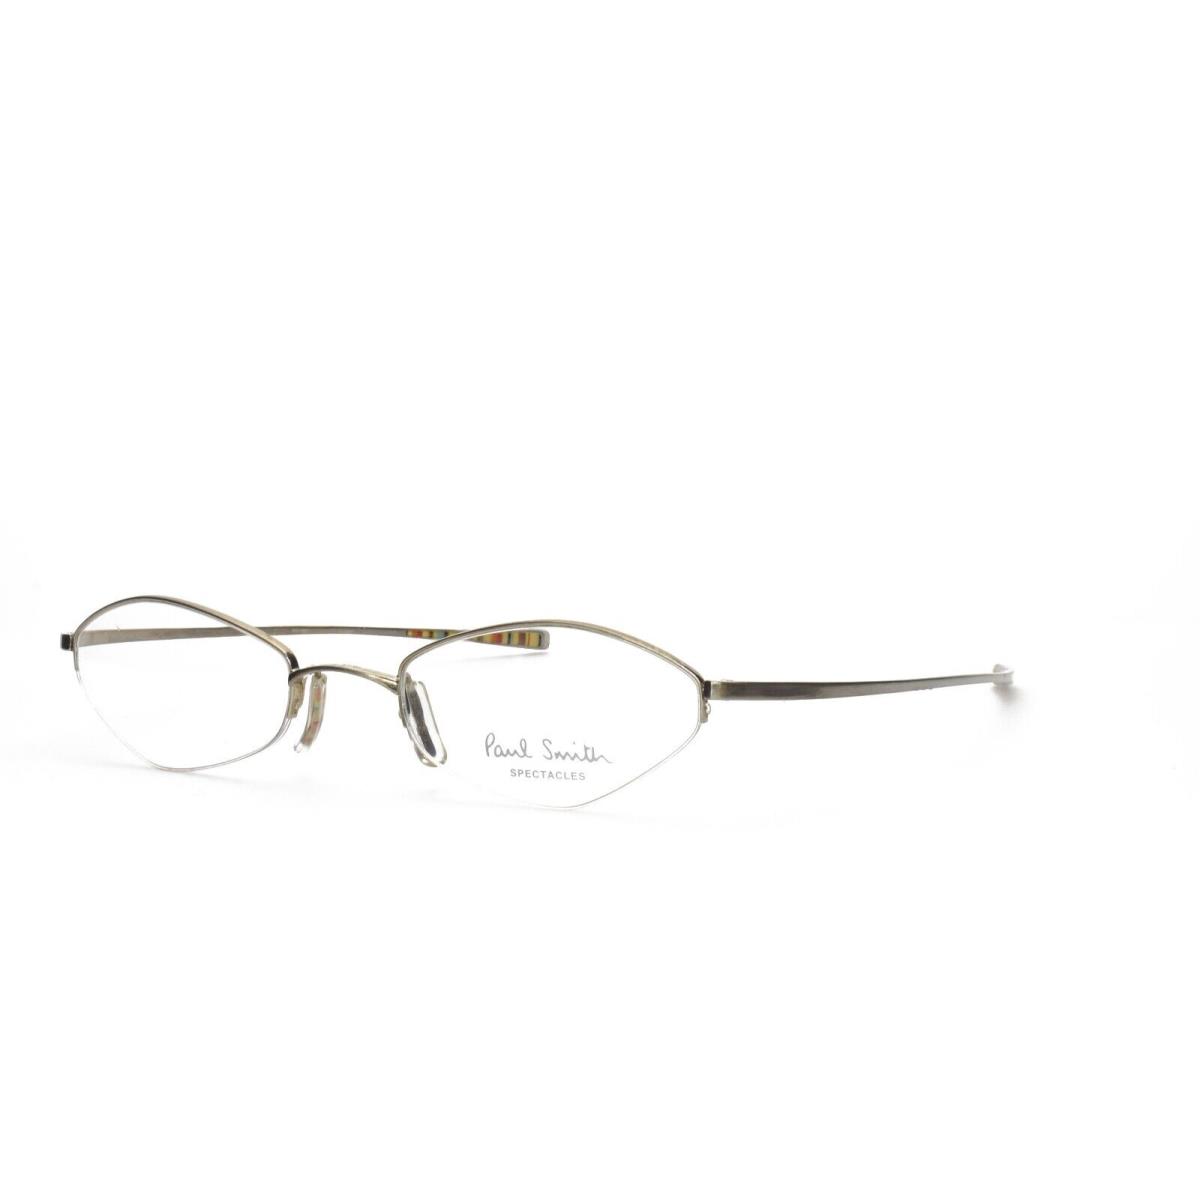 Paul Smith 179 BP 46-19-140 Silver Vtg Vintage Eyeglasses Frames